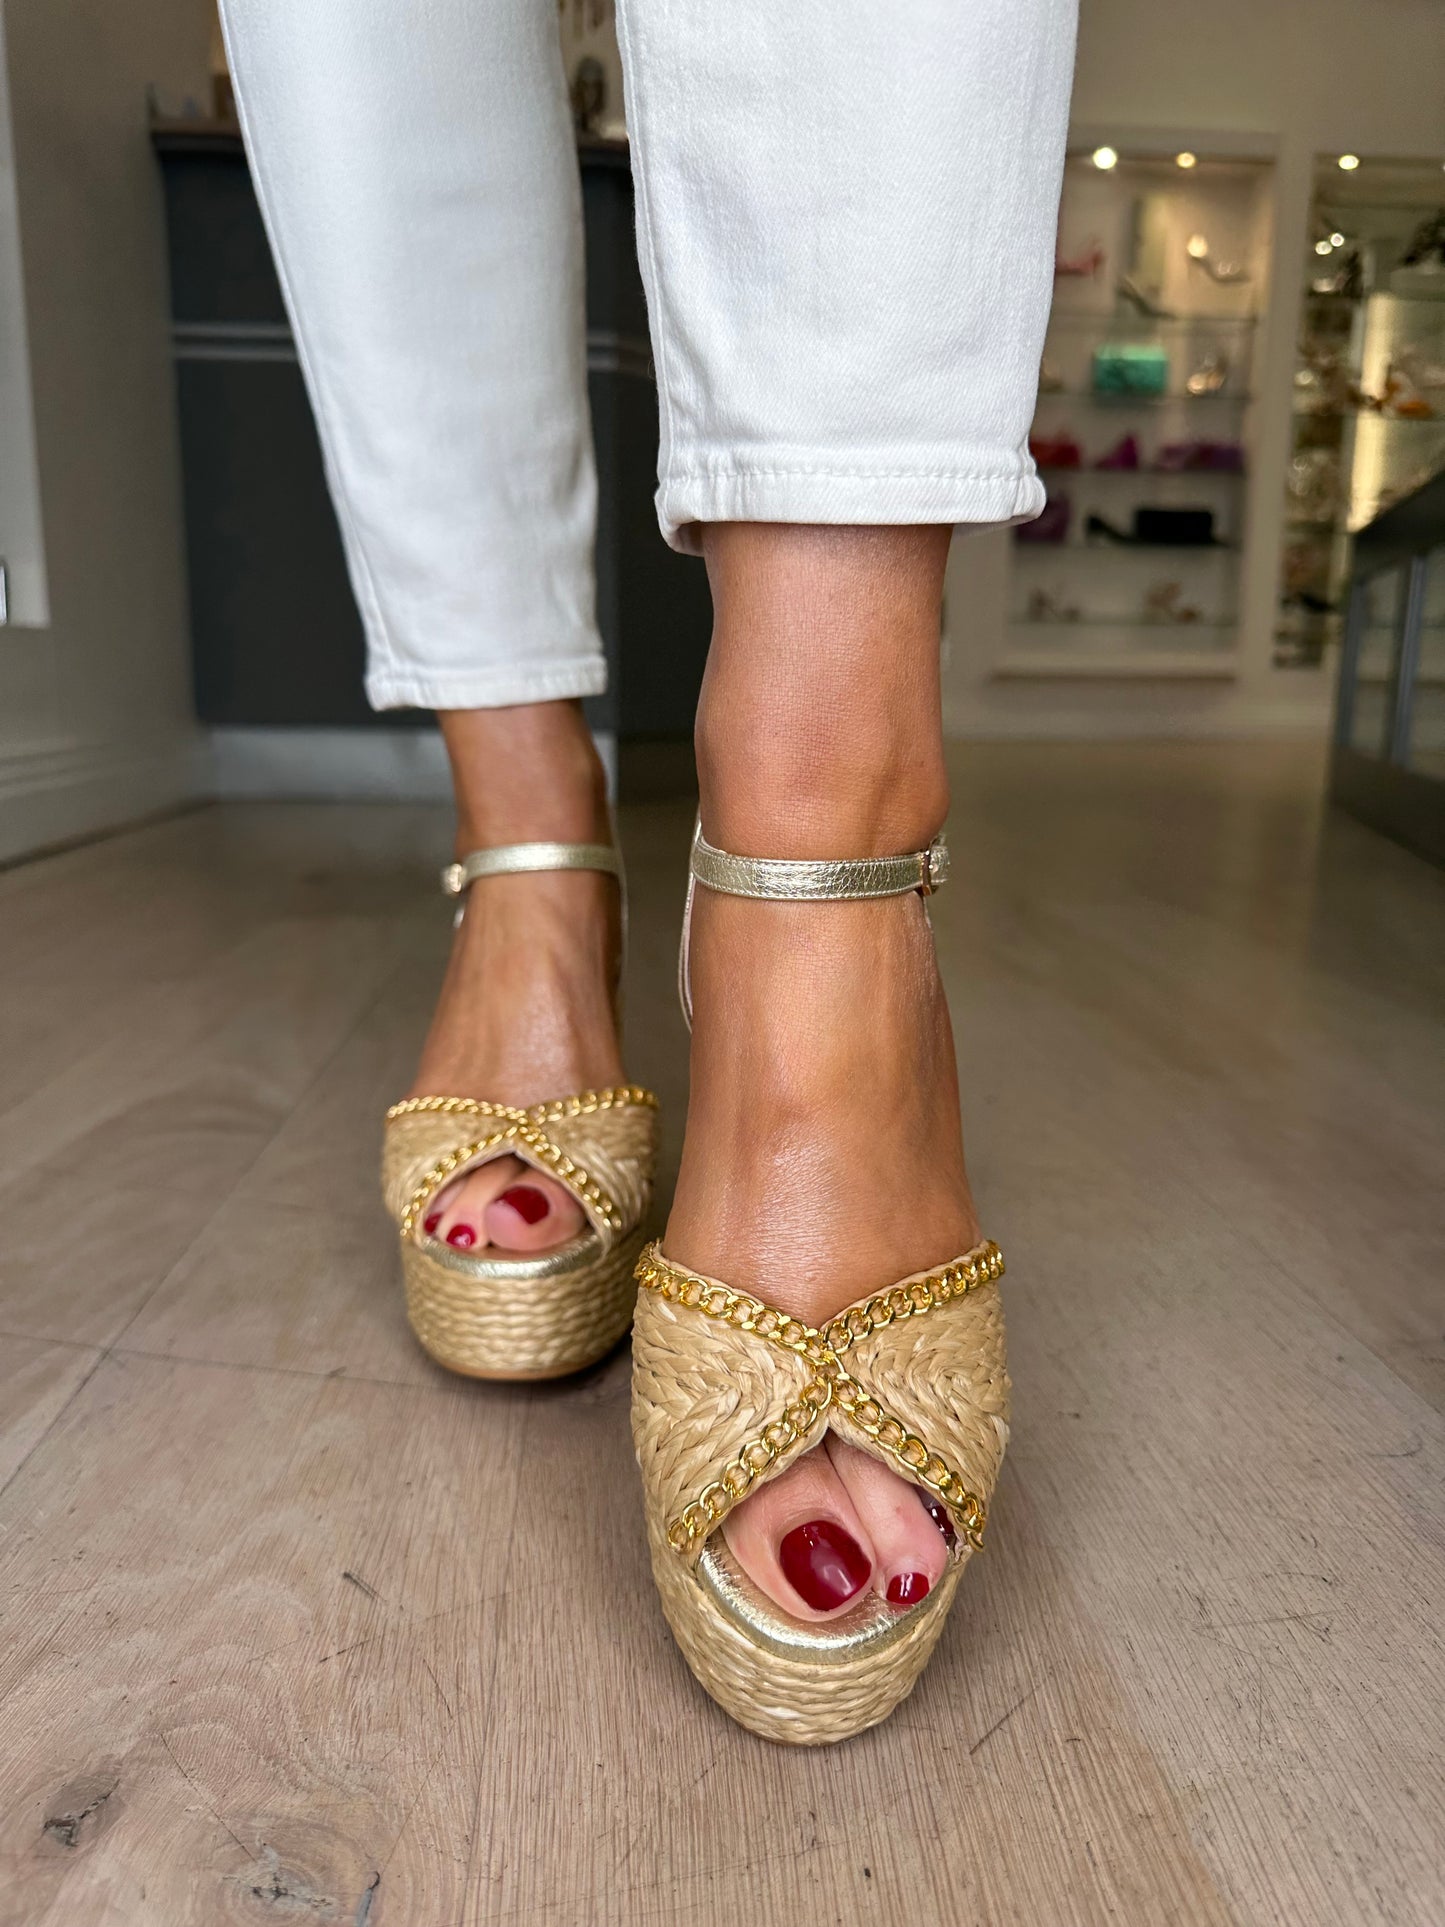 Lodi - Turasi Hessian Platform Sandal With Gold Trim & Block Heel